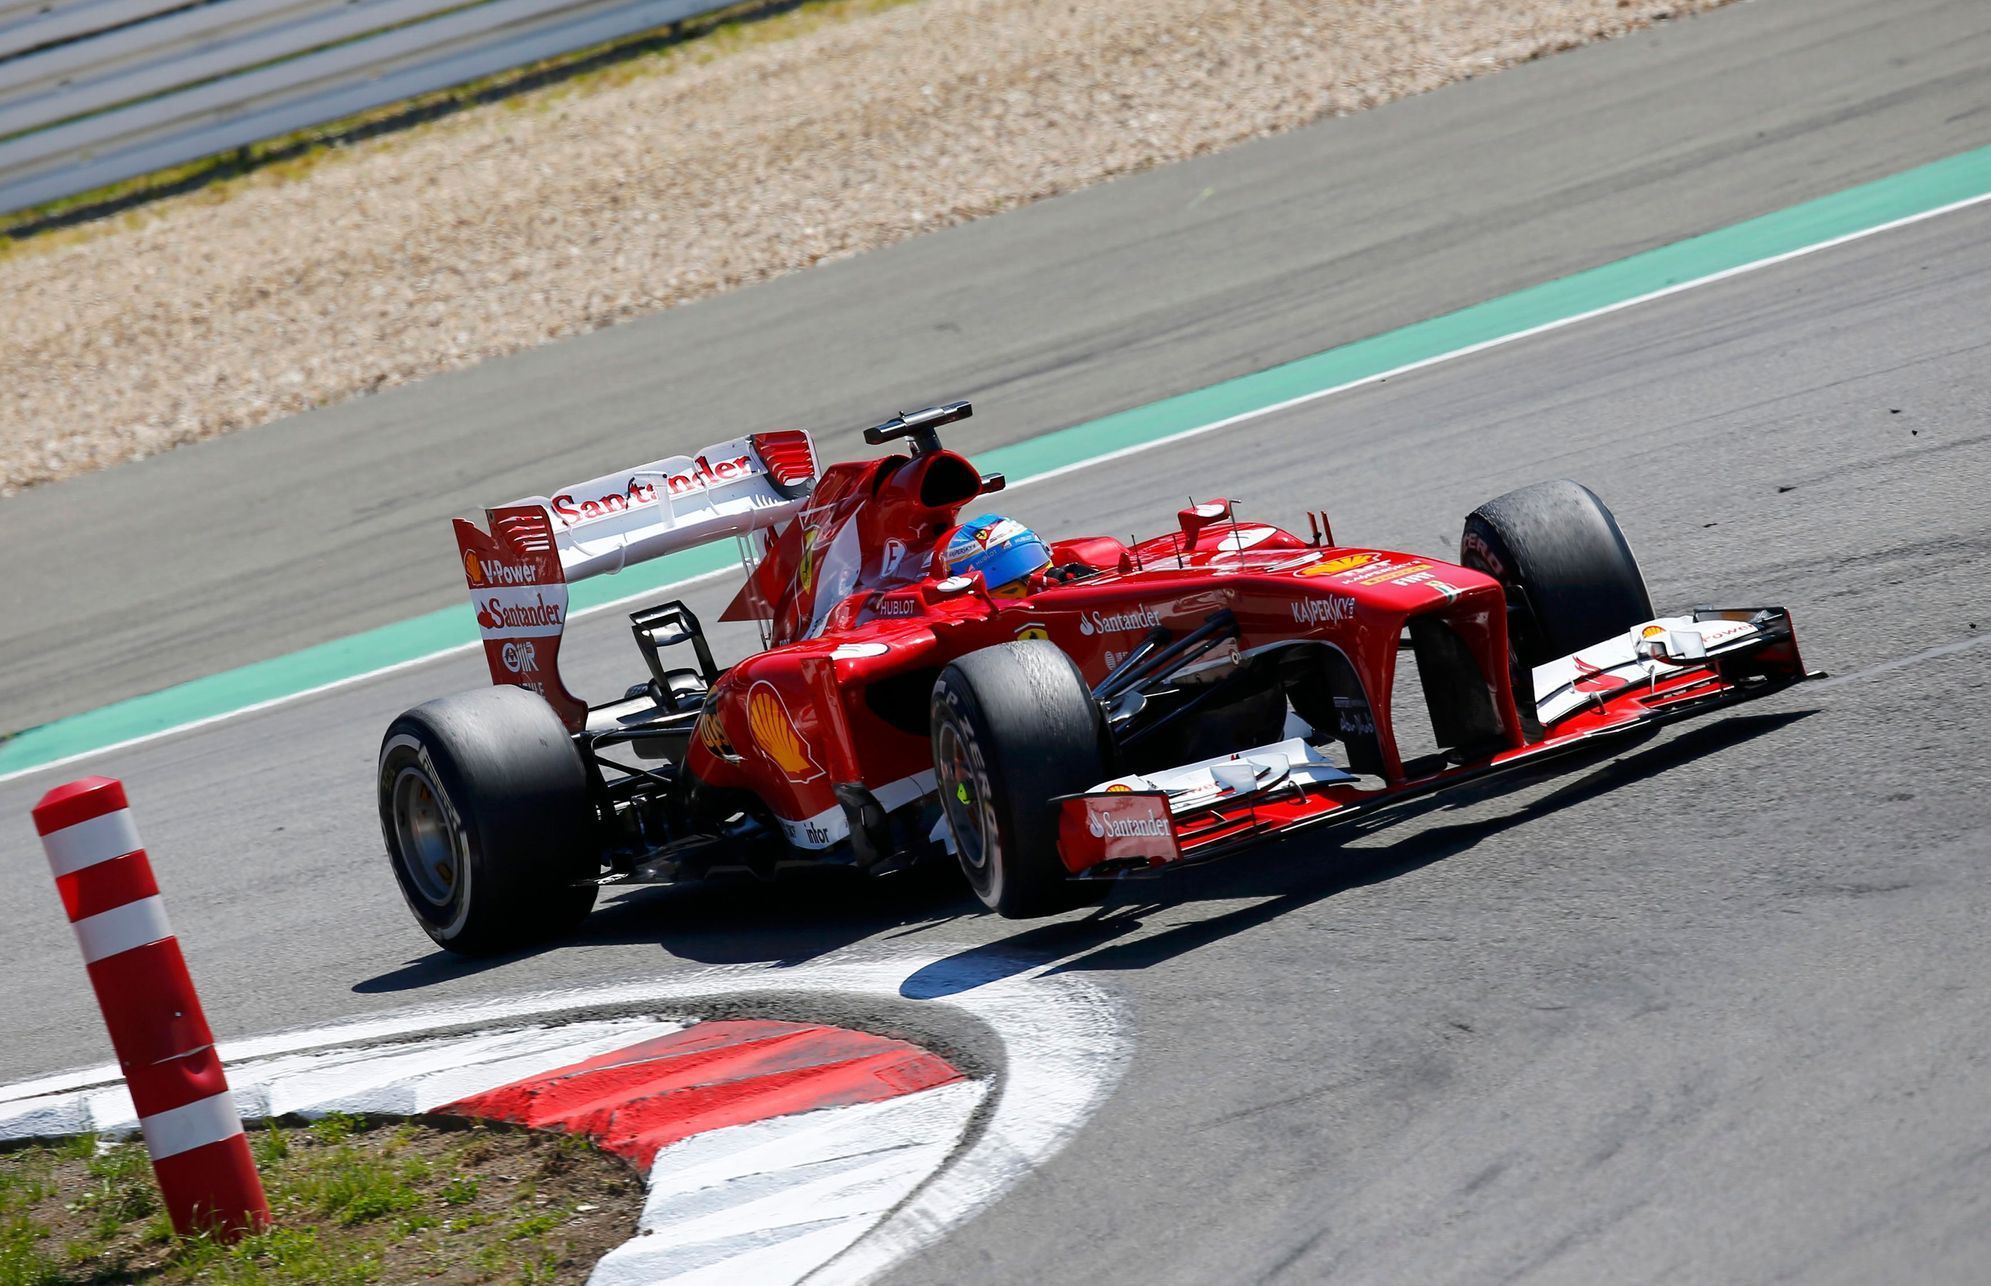 Ferrari Formula One driver Alonso takes corner during German